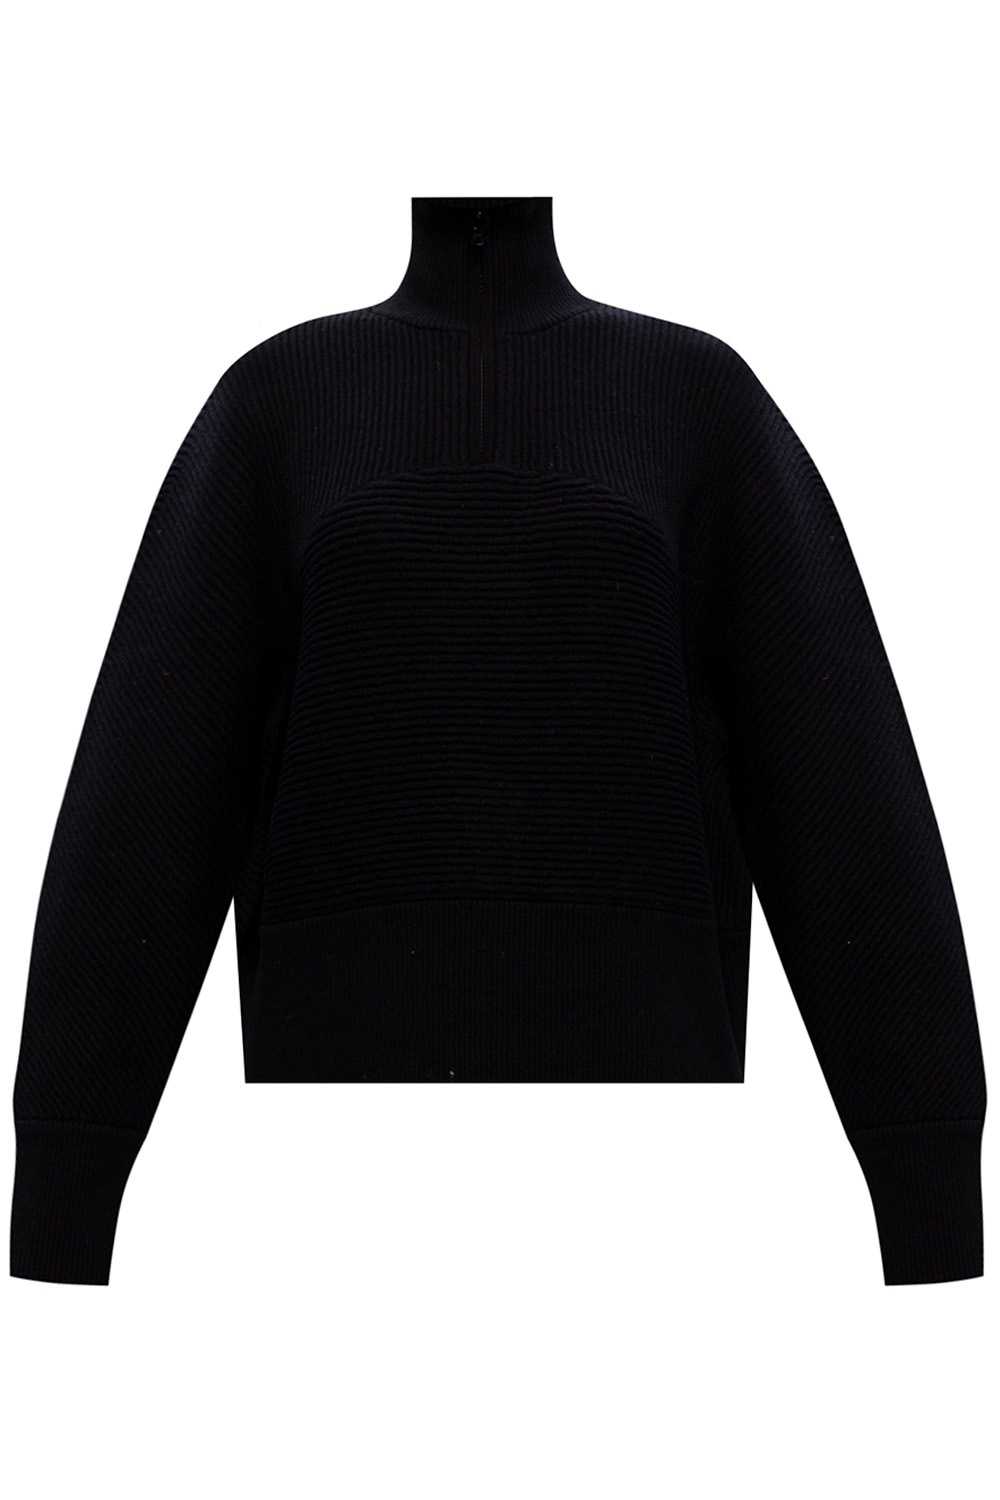 YOHJI YAMAMOTO Black Distressed Sweater